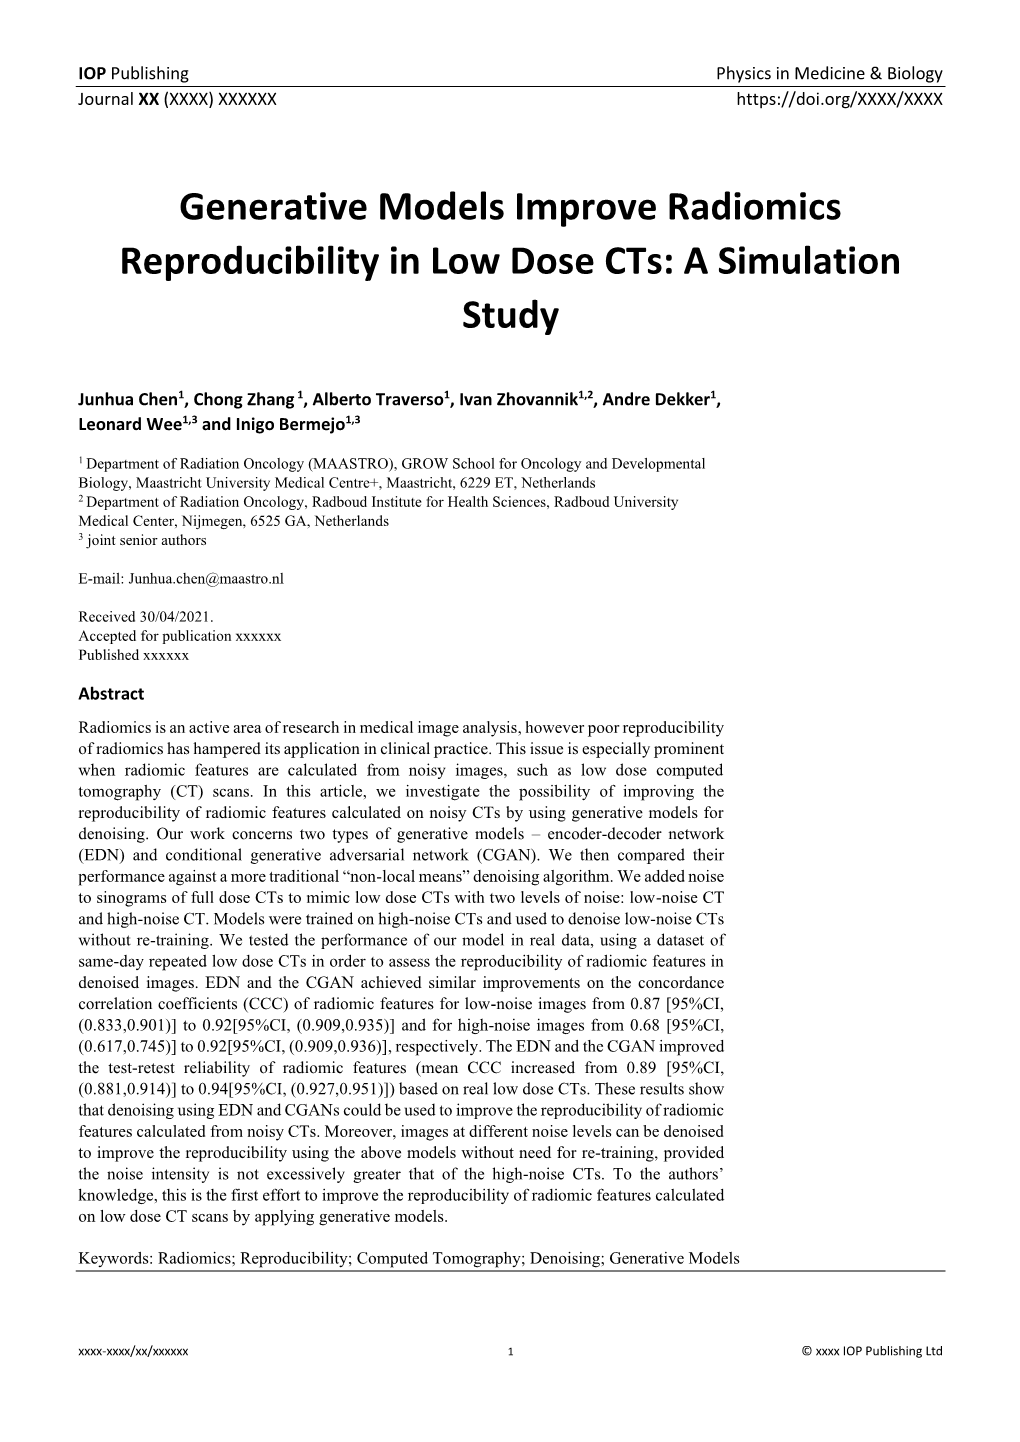 Generative Models Improve Radiomics Reproducibility in Low Dose Cts: a Simulation Study